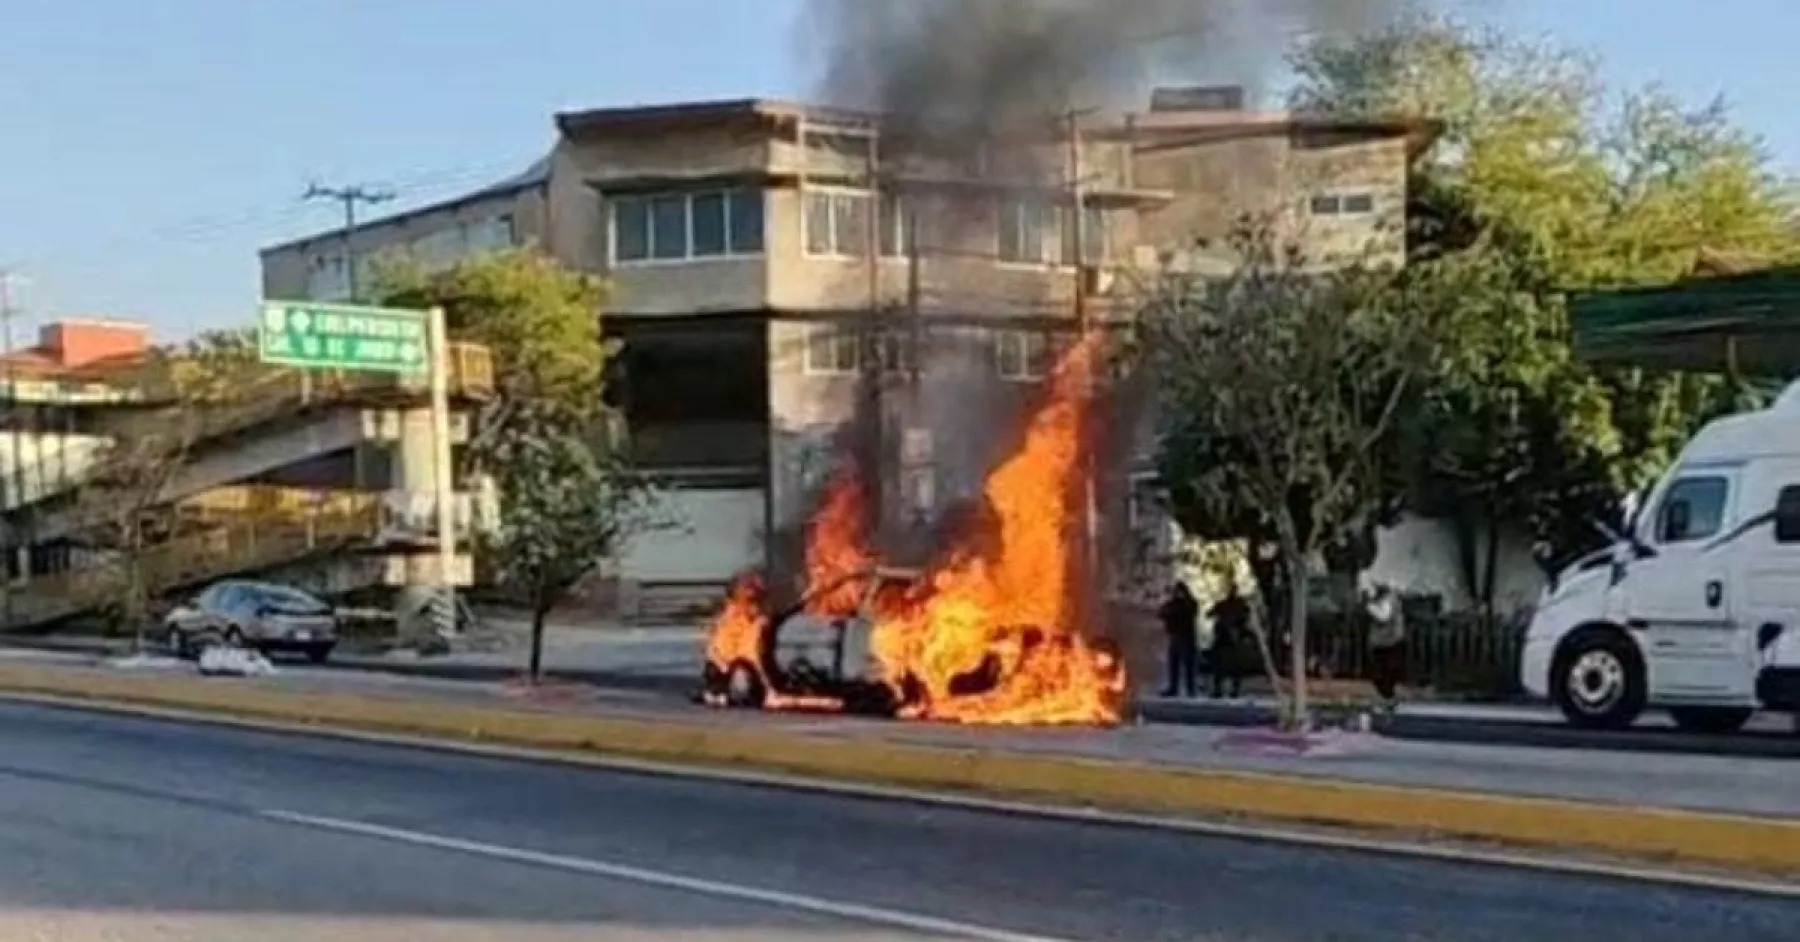 Ejecutan a 4 choferes en matutina jornada de violencia en Chilpancingo